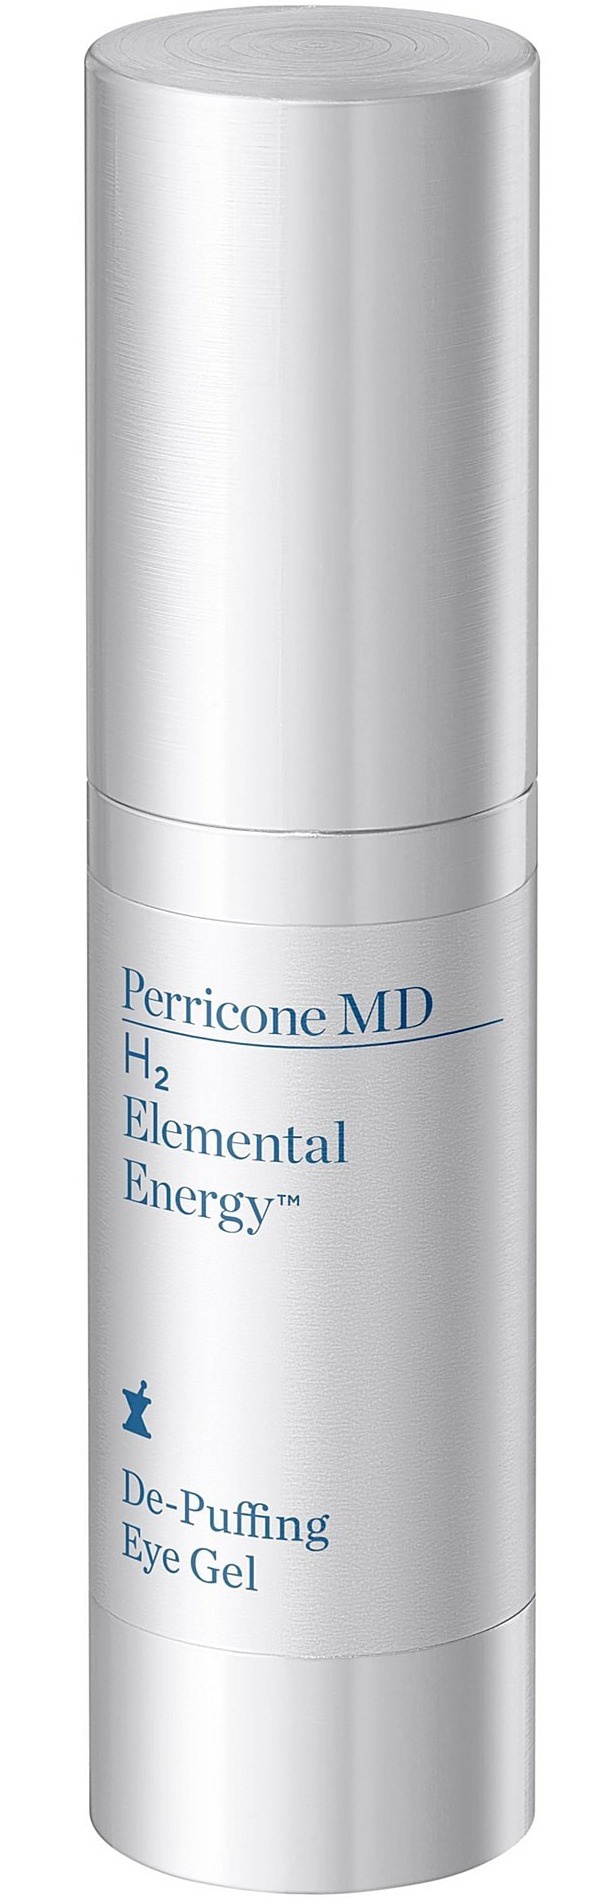 Perricone MD H2 Elemental Energy